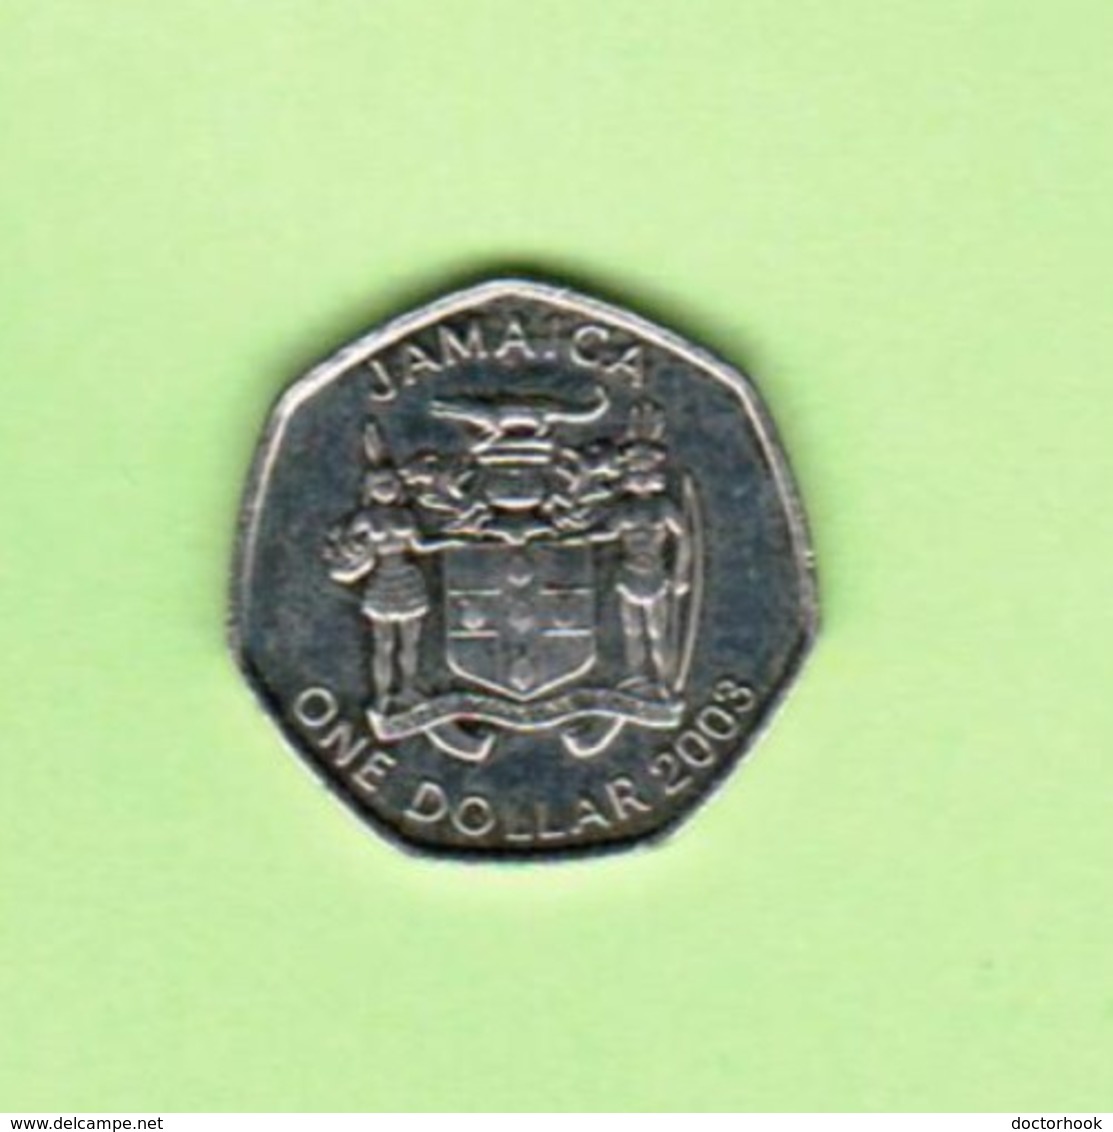 JAMAICA   $1.00 DOLLAR 2003  (KM # 164) #5202 - Jamaica